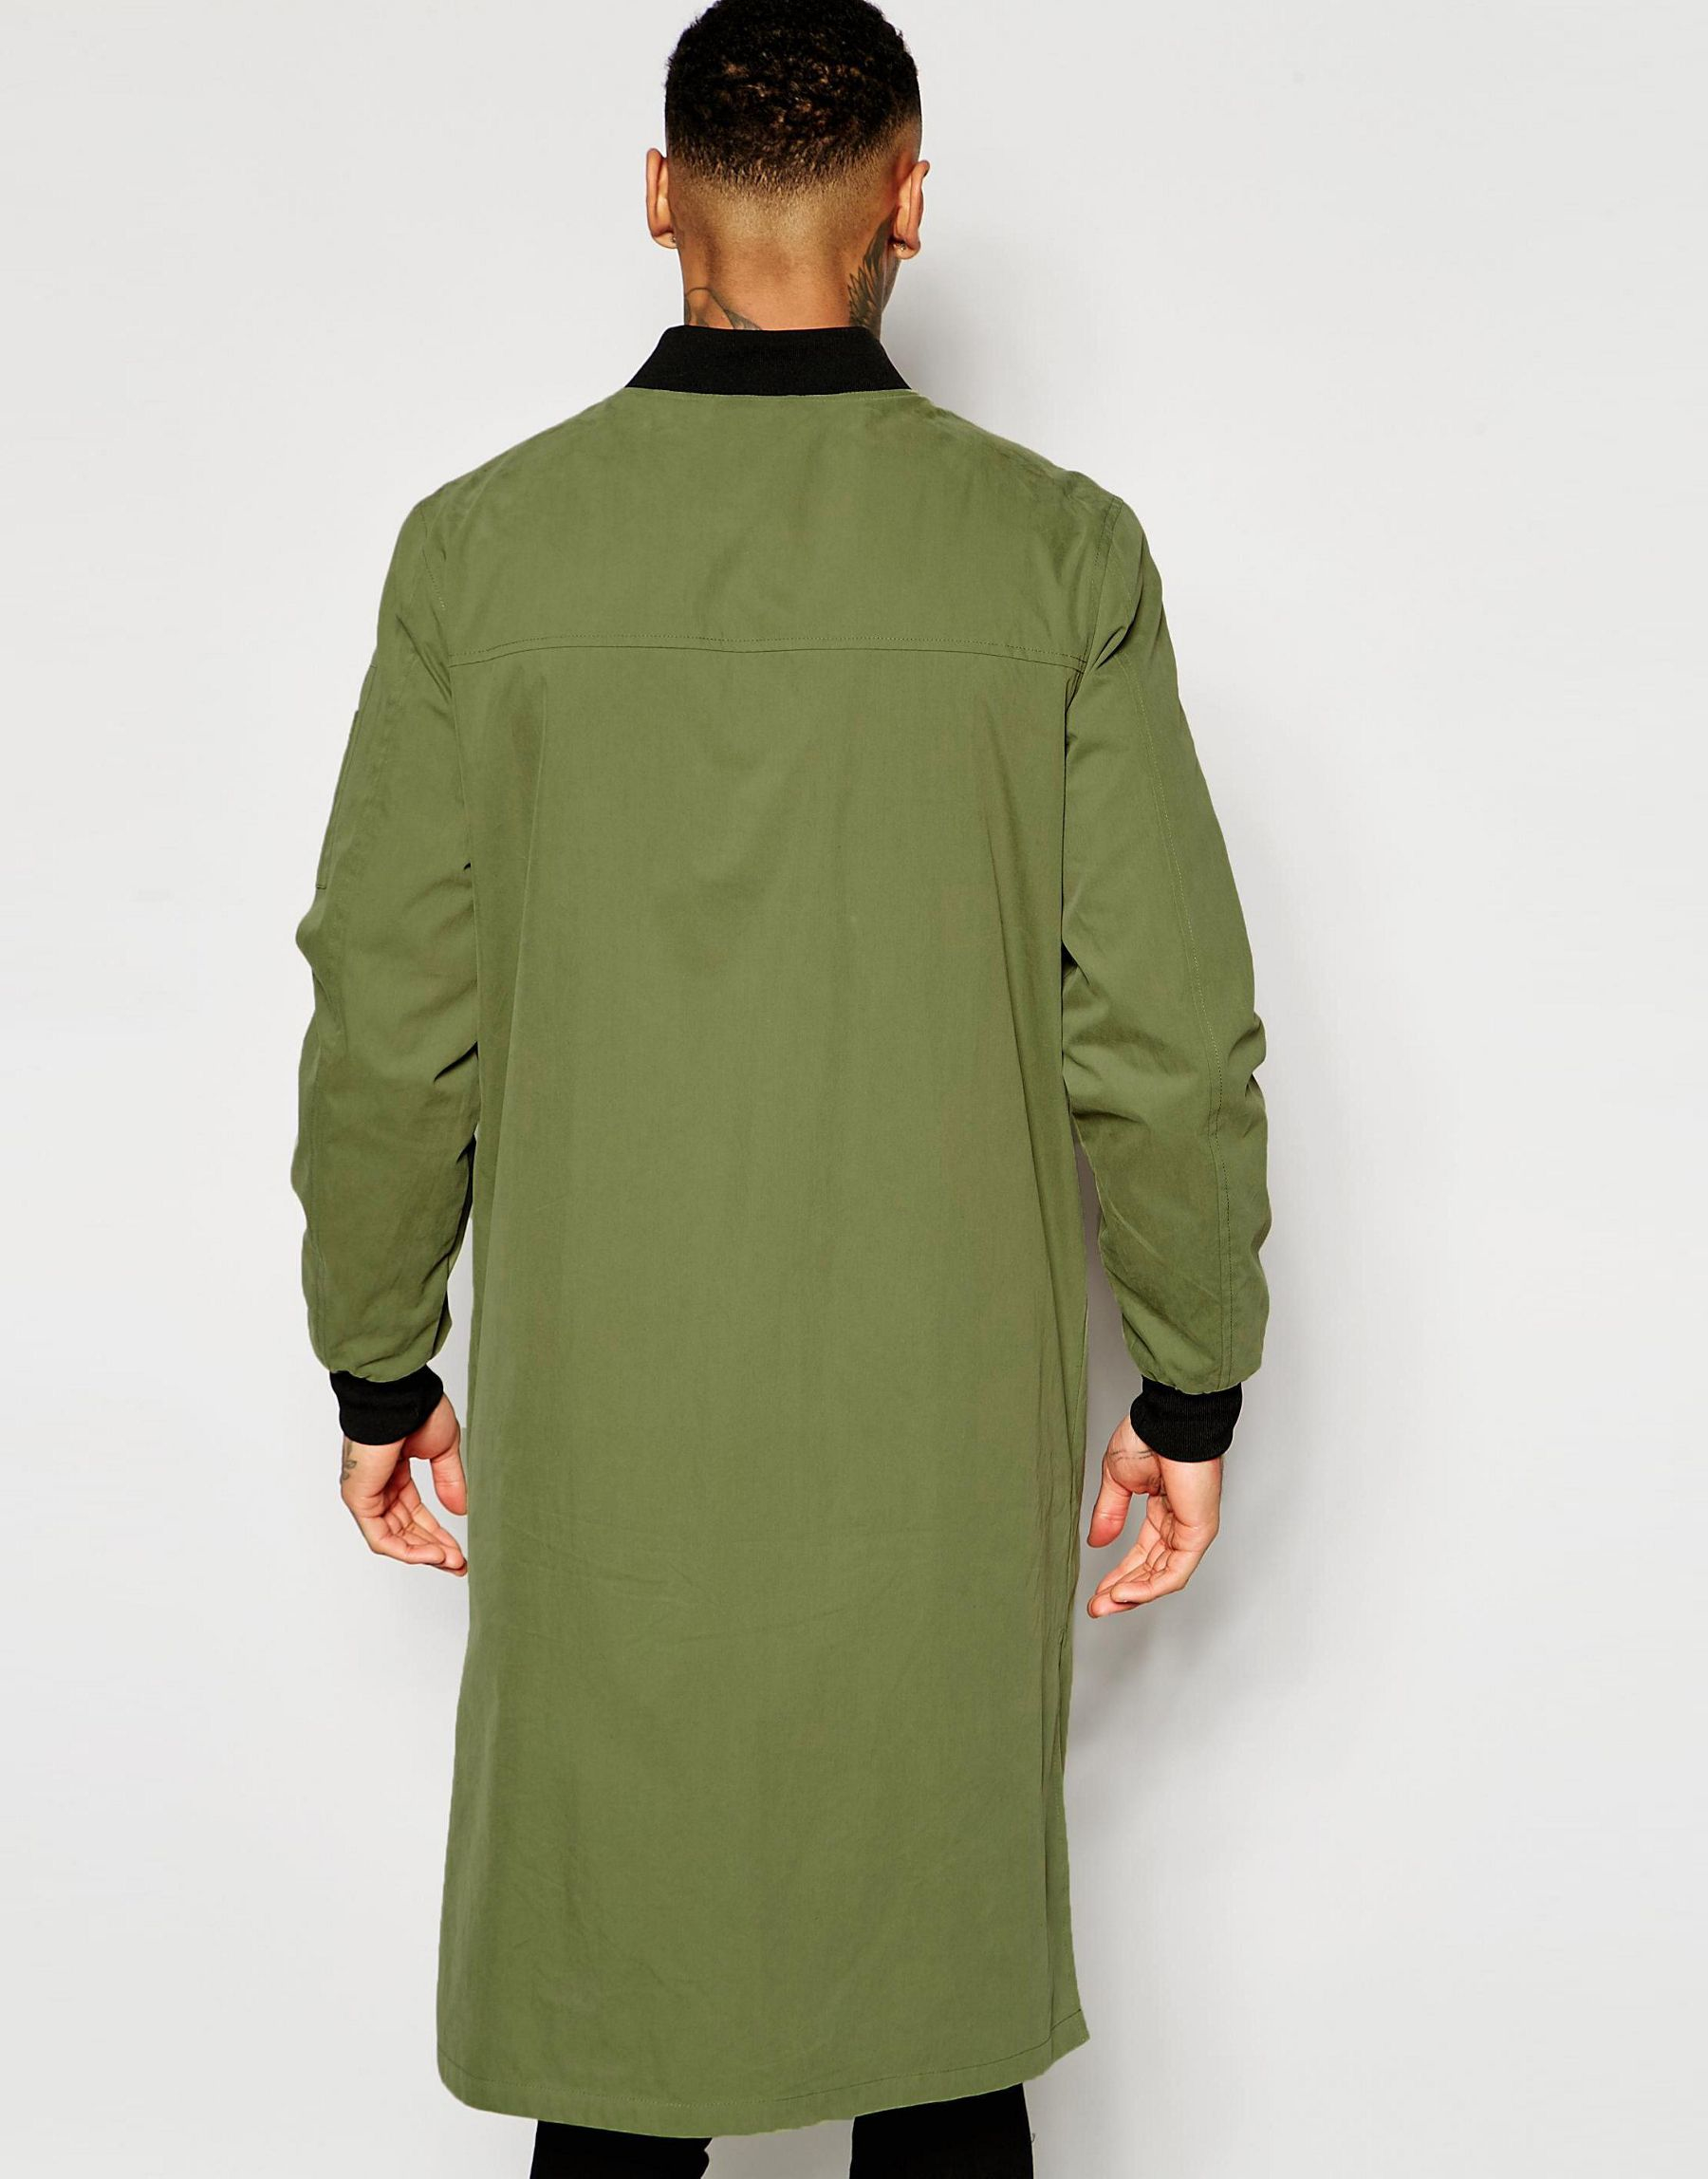 ASOS Extreme Longline Bomber Jacket In Khaki in Green for Men - Lyst